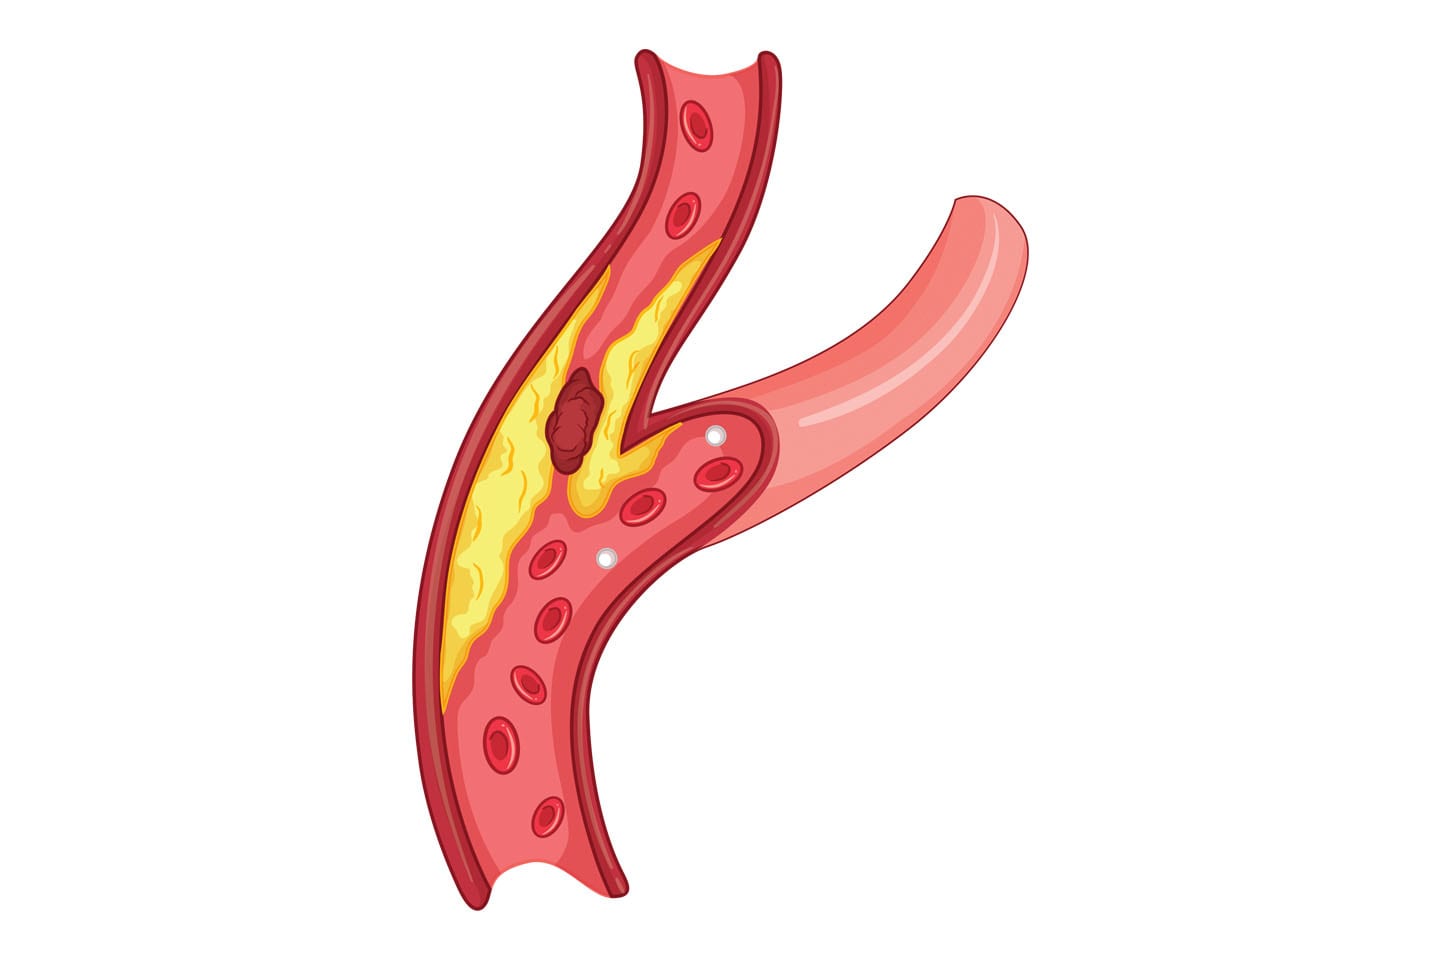 vascular health artery disease chattanooga